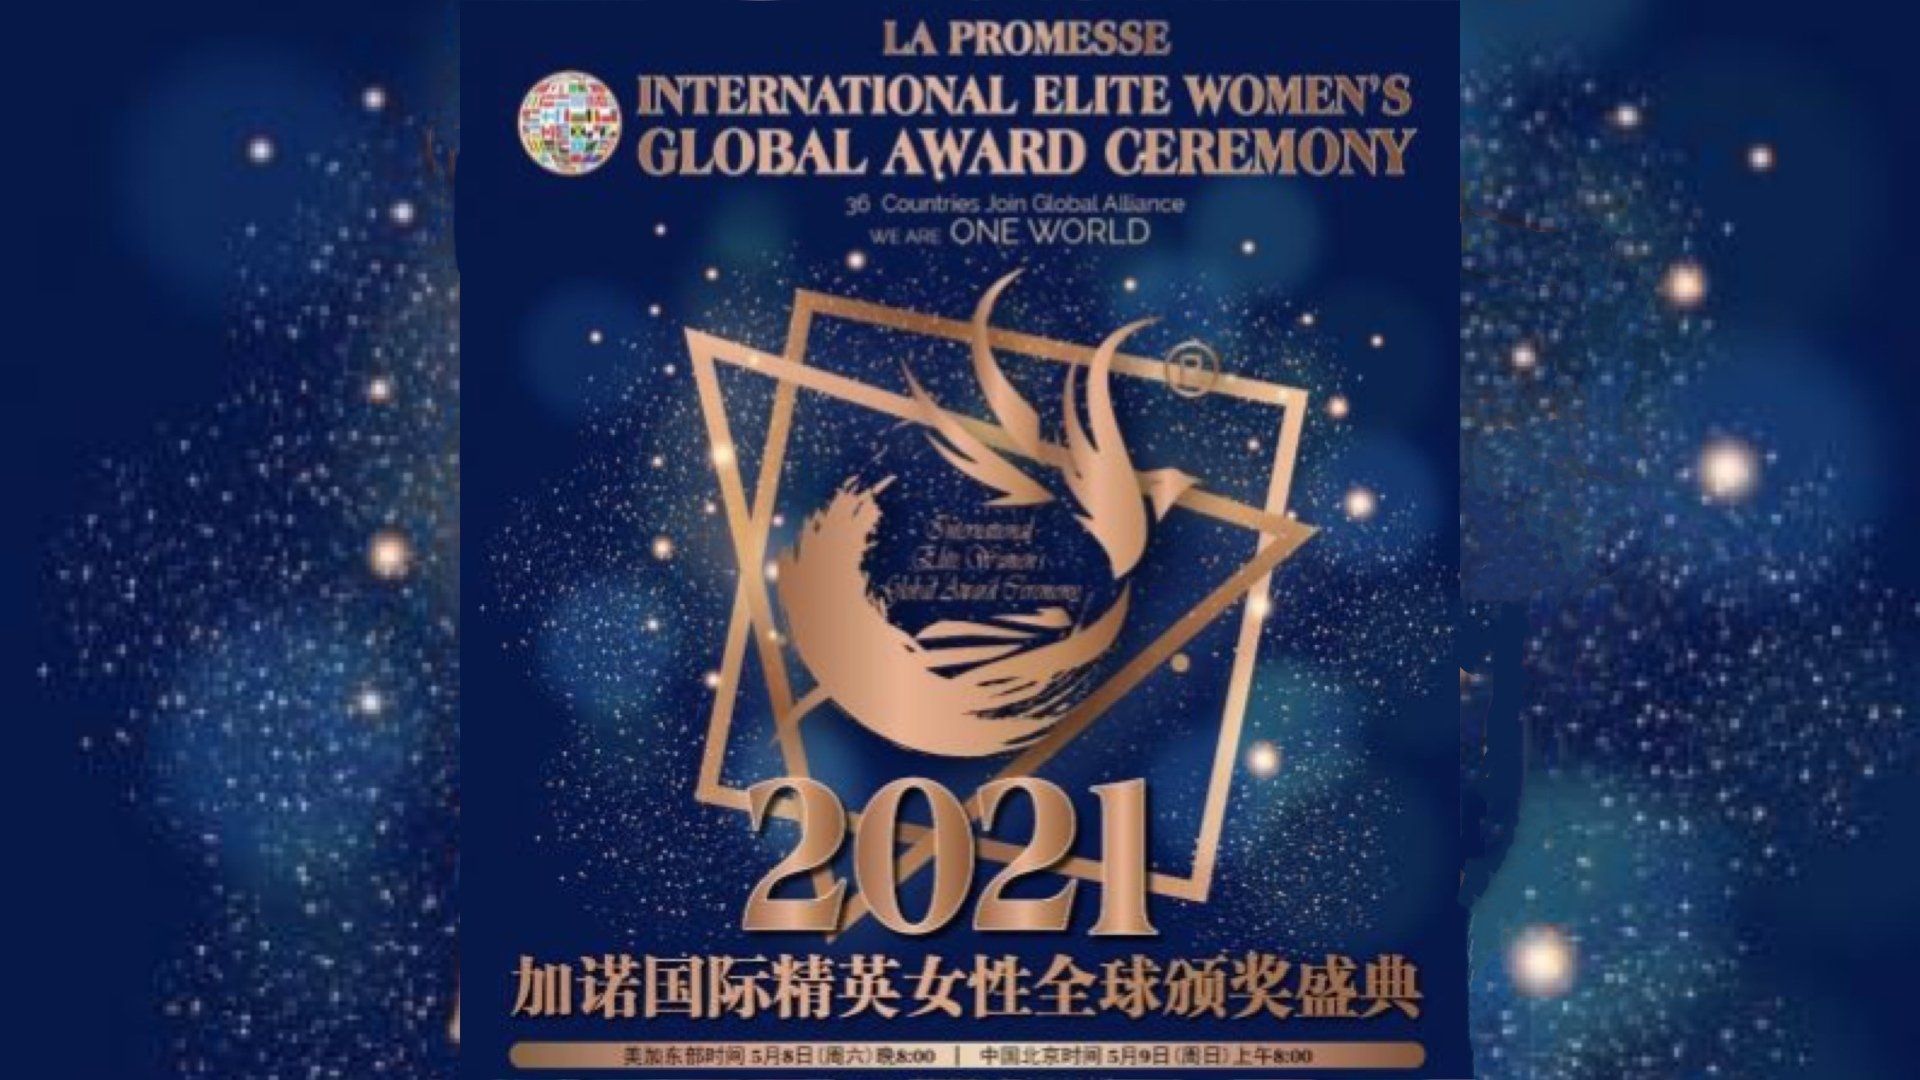 International Elite Women's Global Award Ceremony, empower women